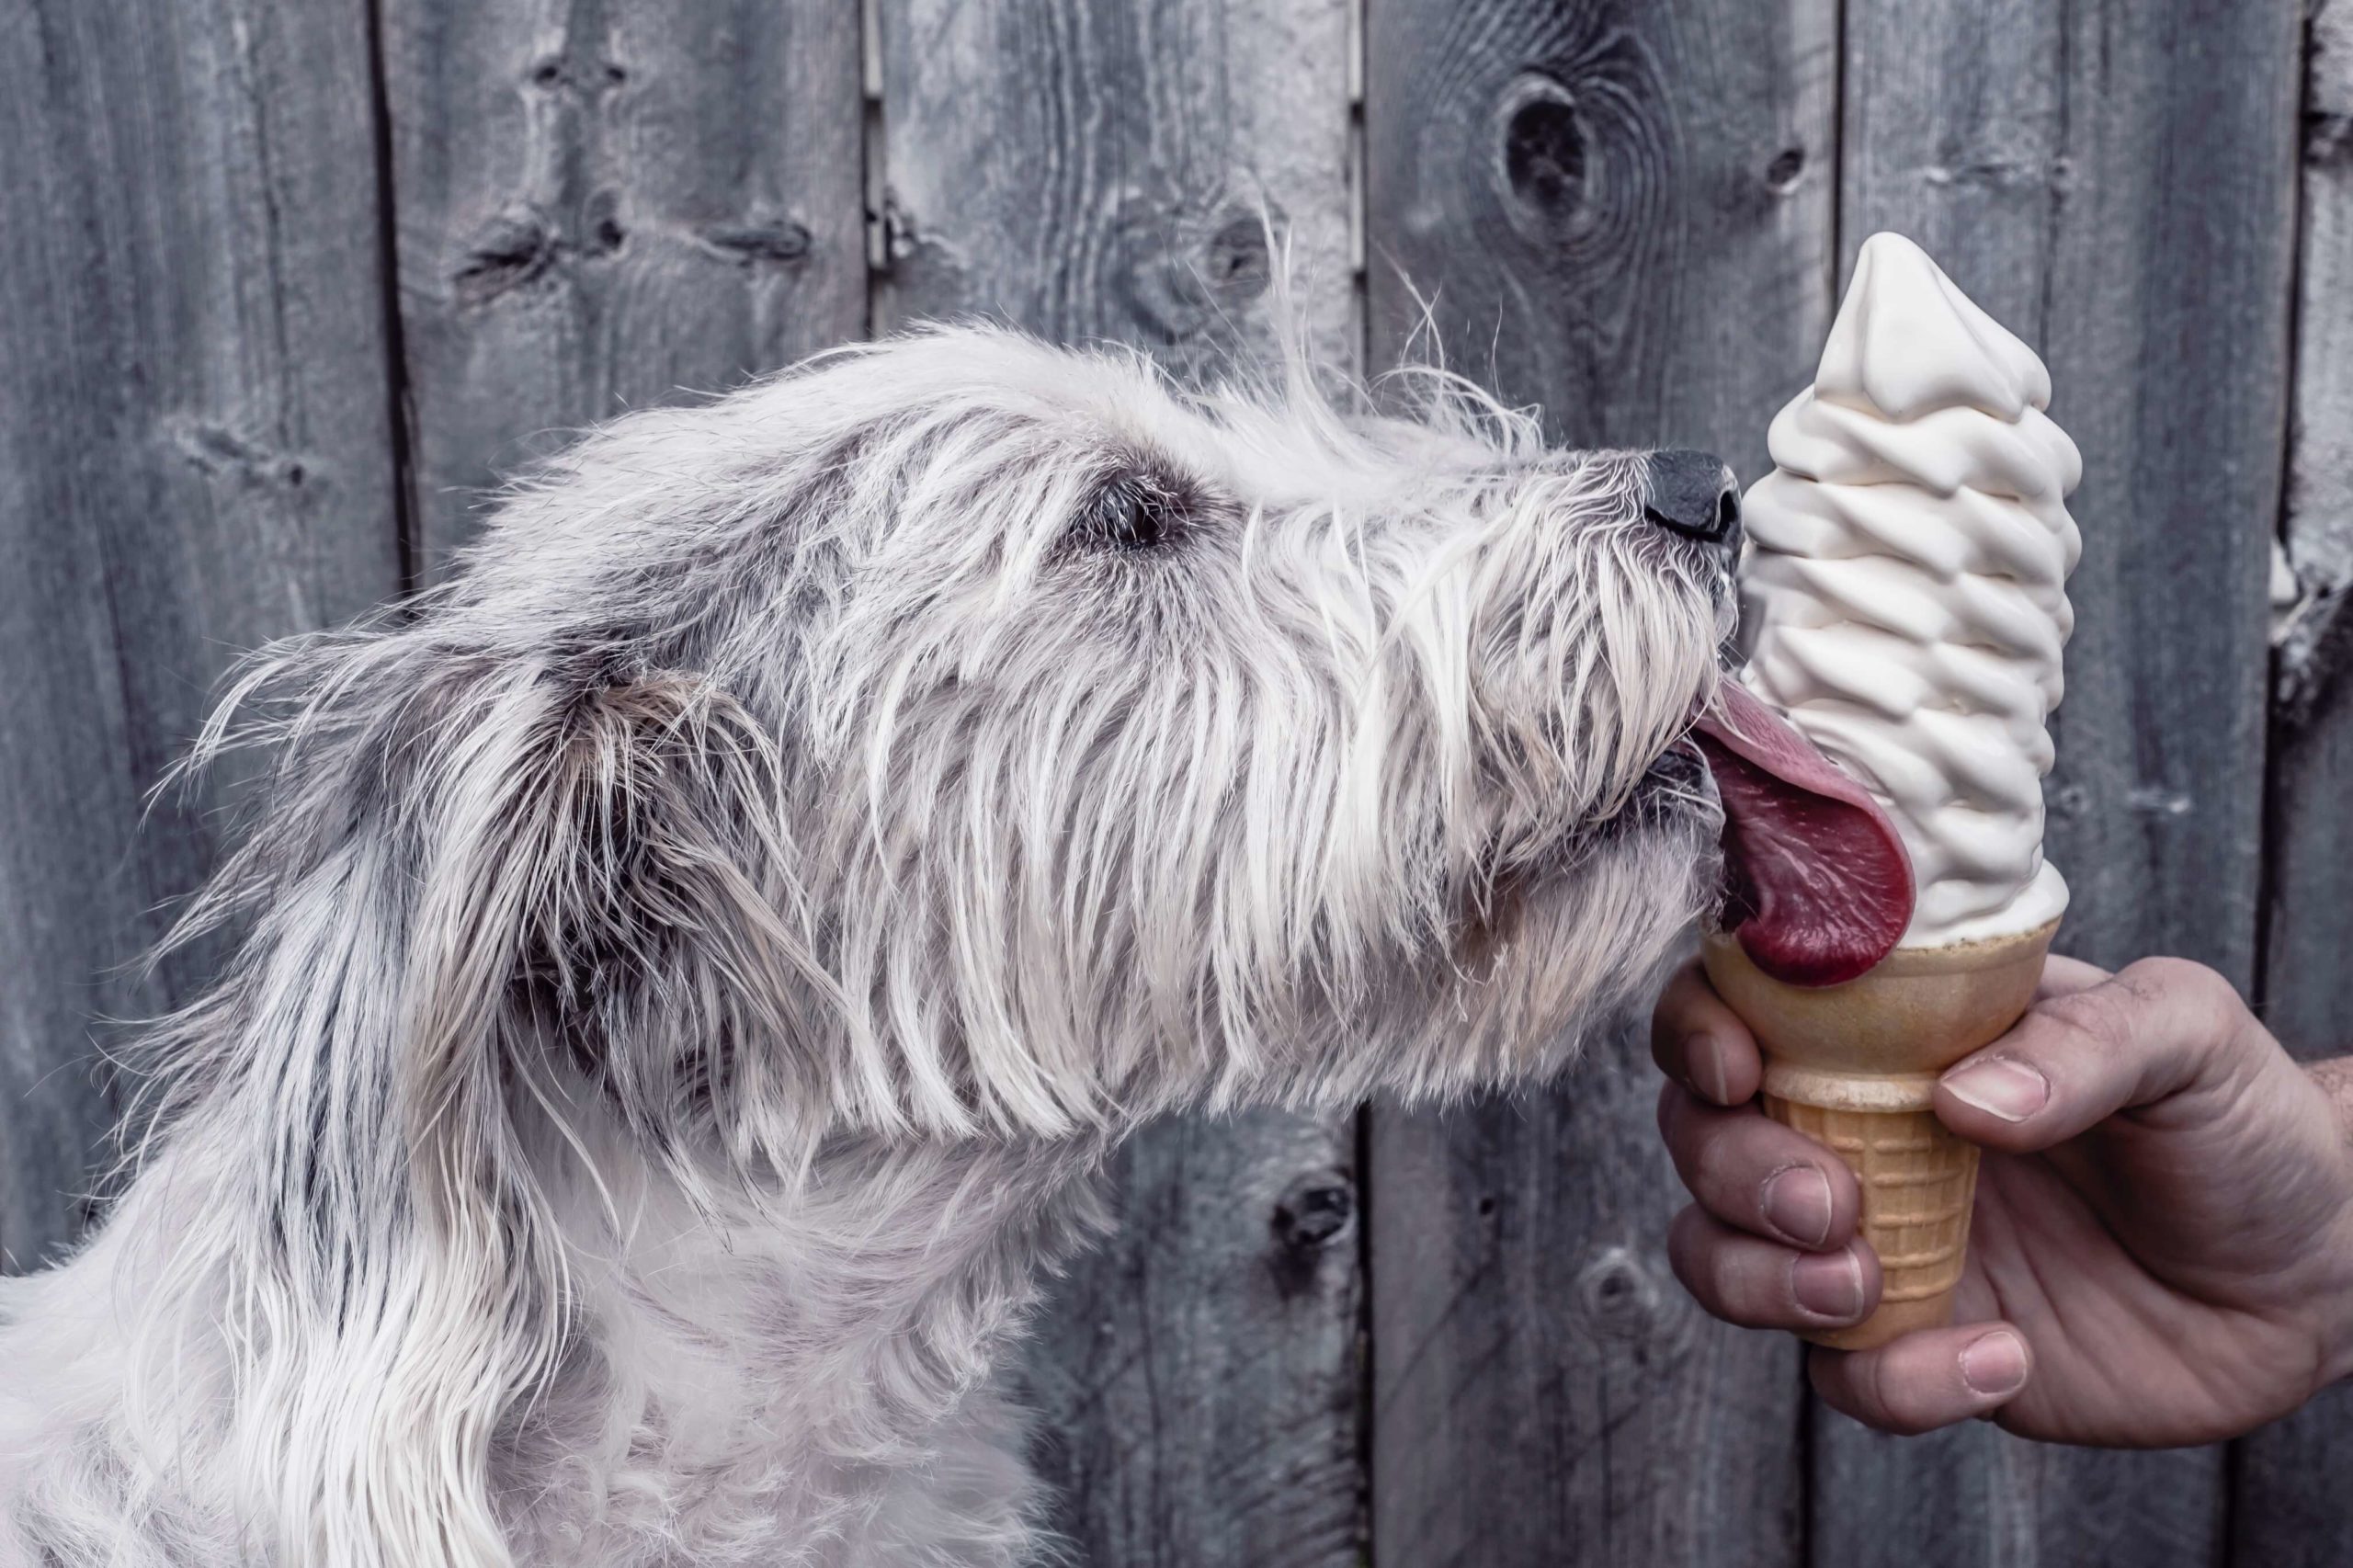 Cachorro tomando sorvete